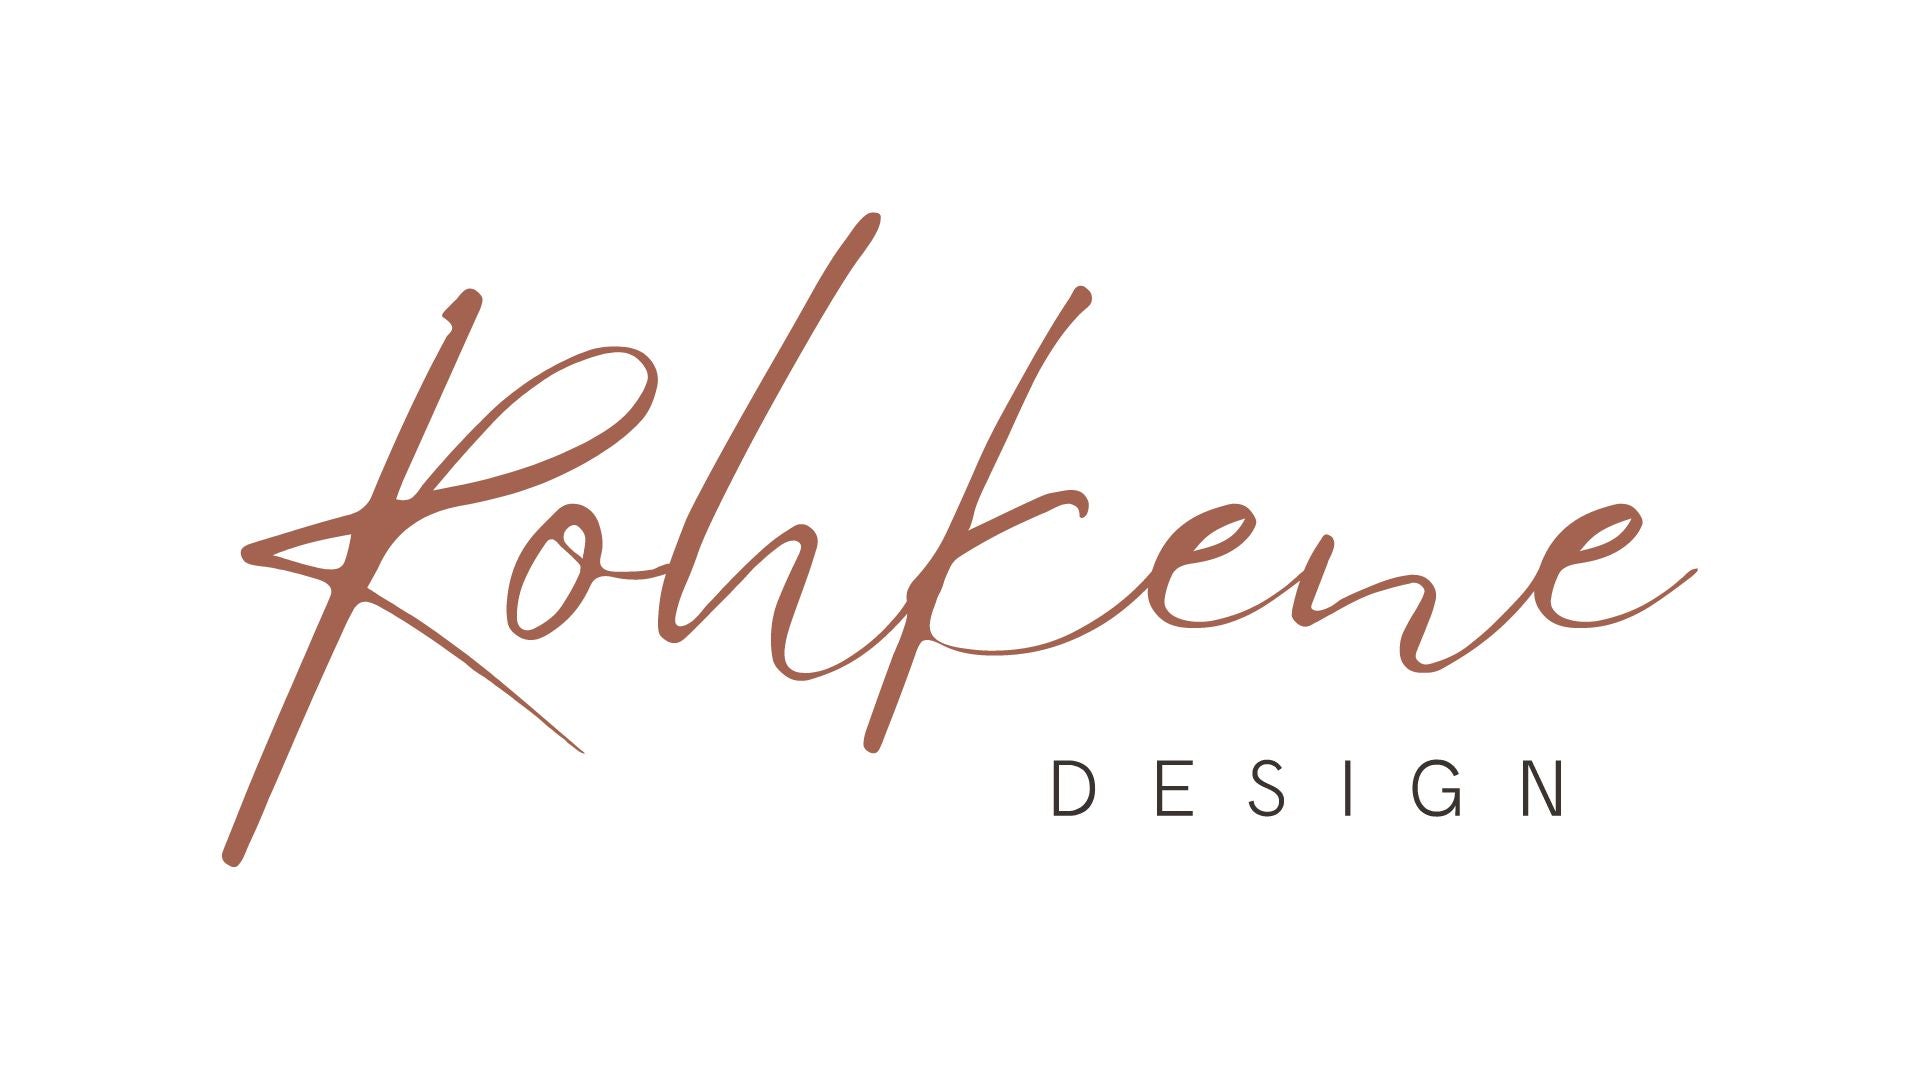 Rohkene Design